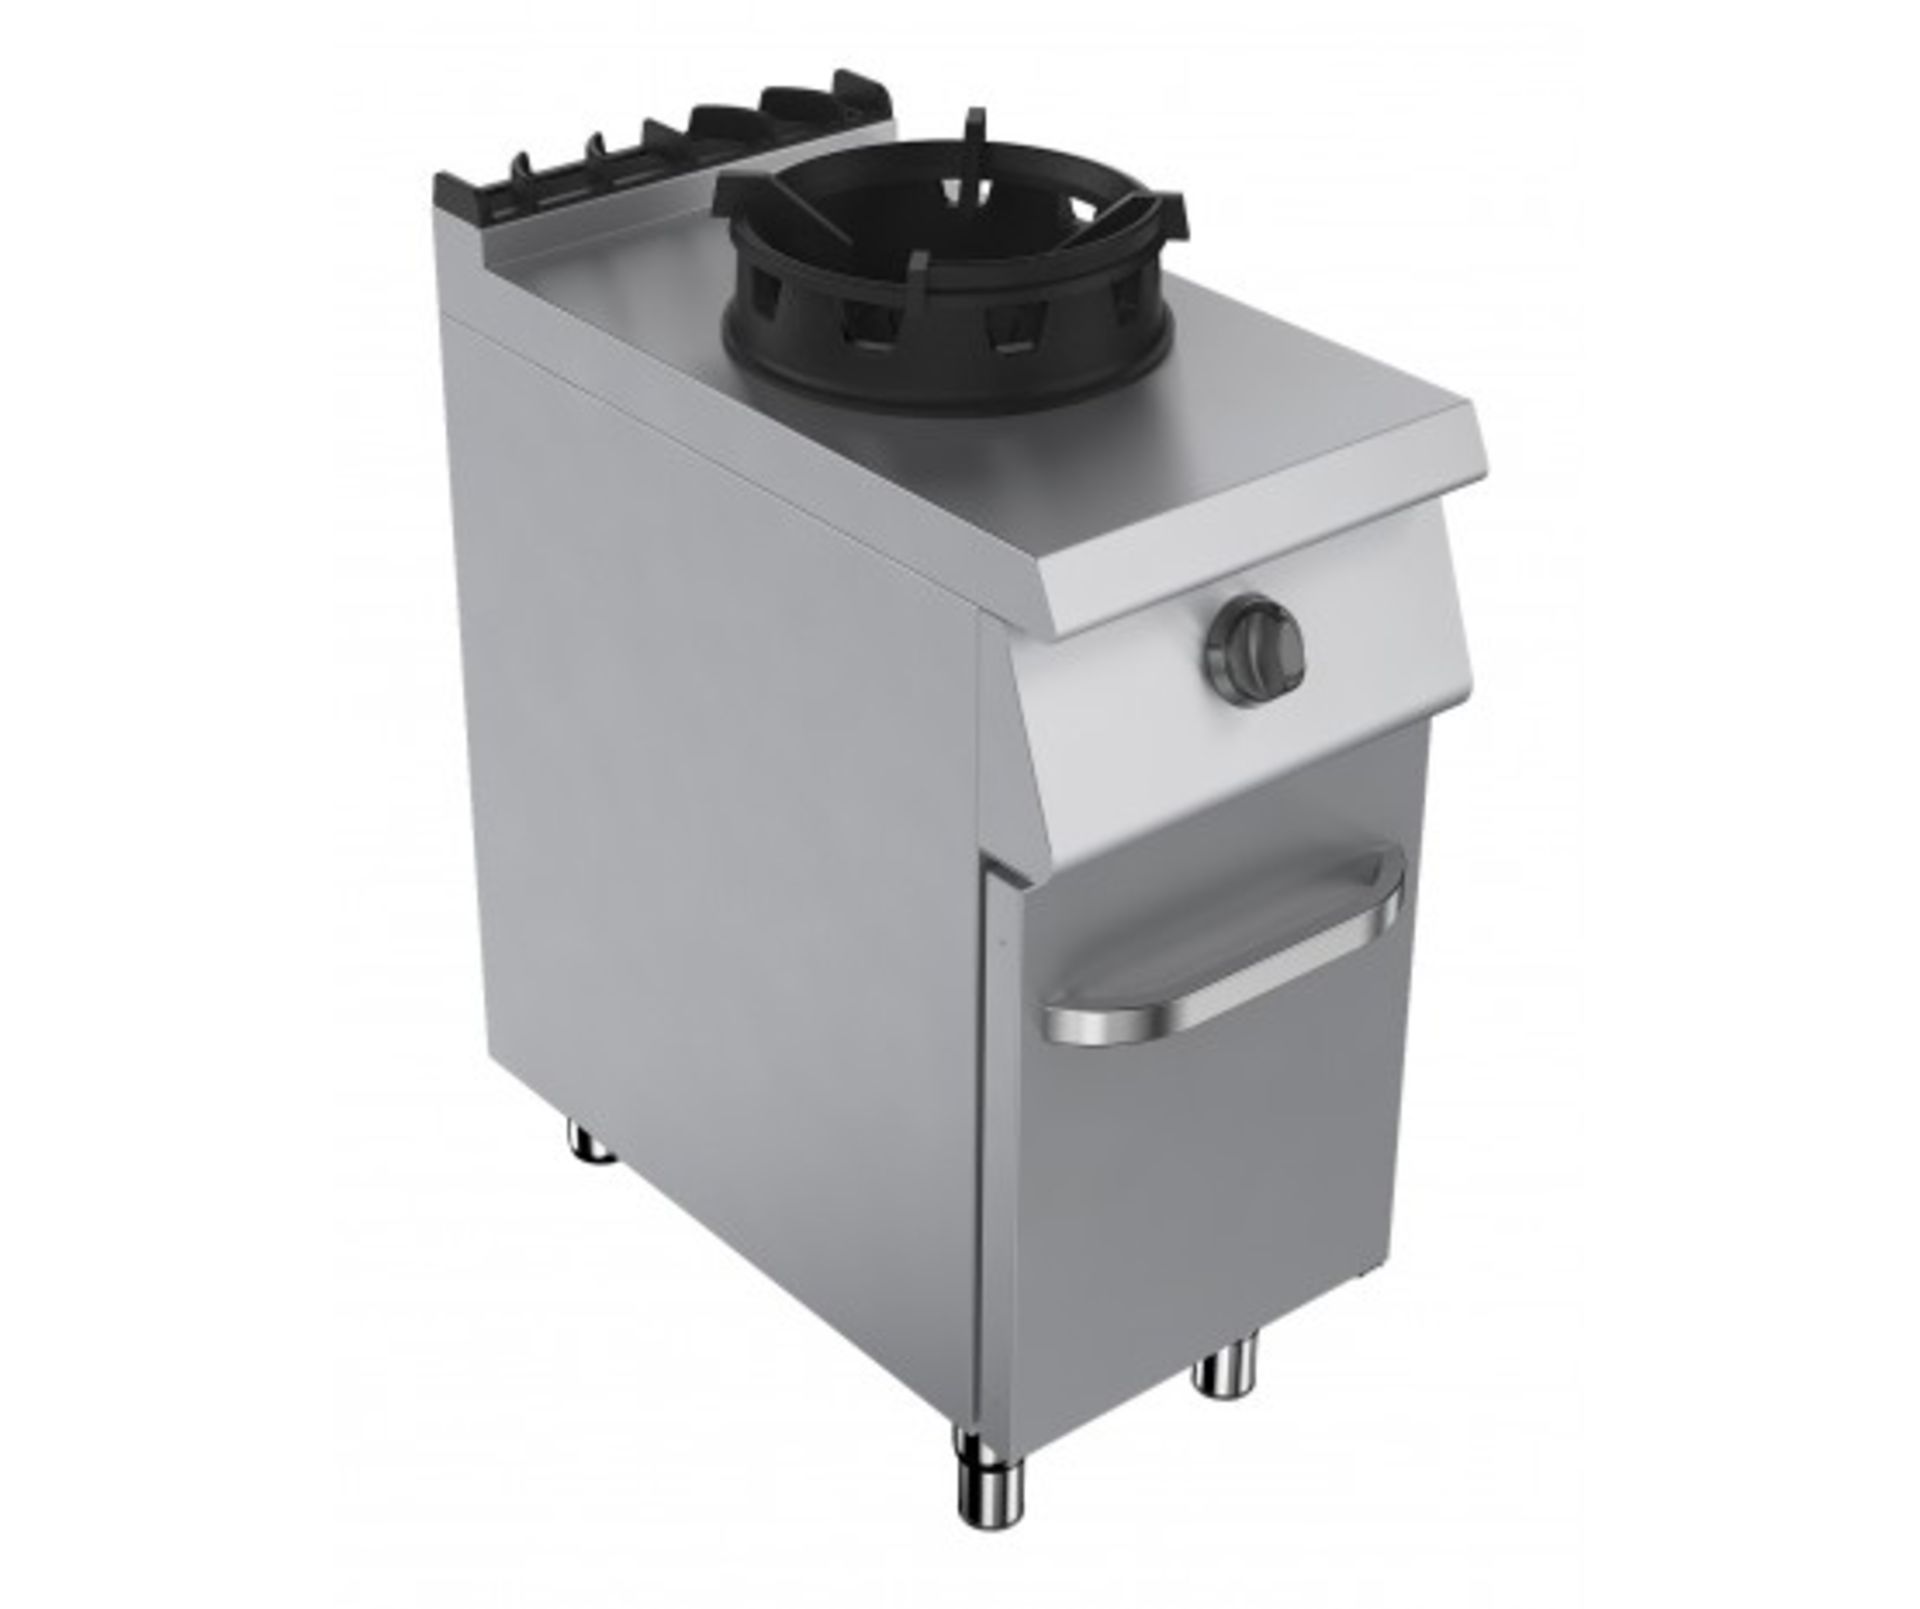 Wok cooker - 10kW - 400W x 730D x 900H - GAS - RG7W100G